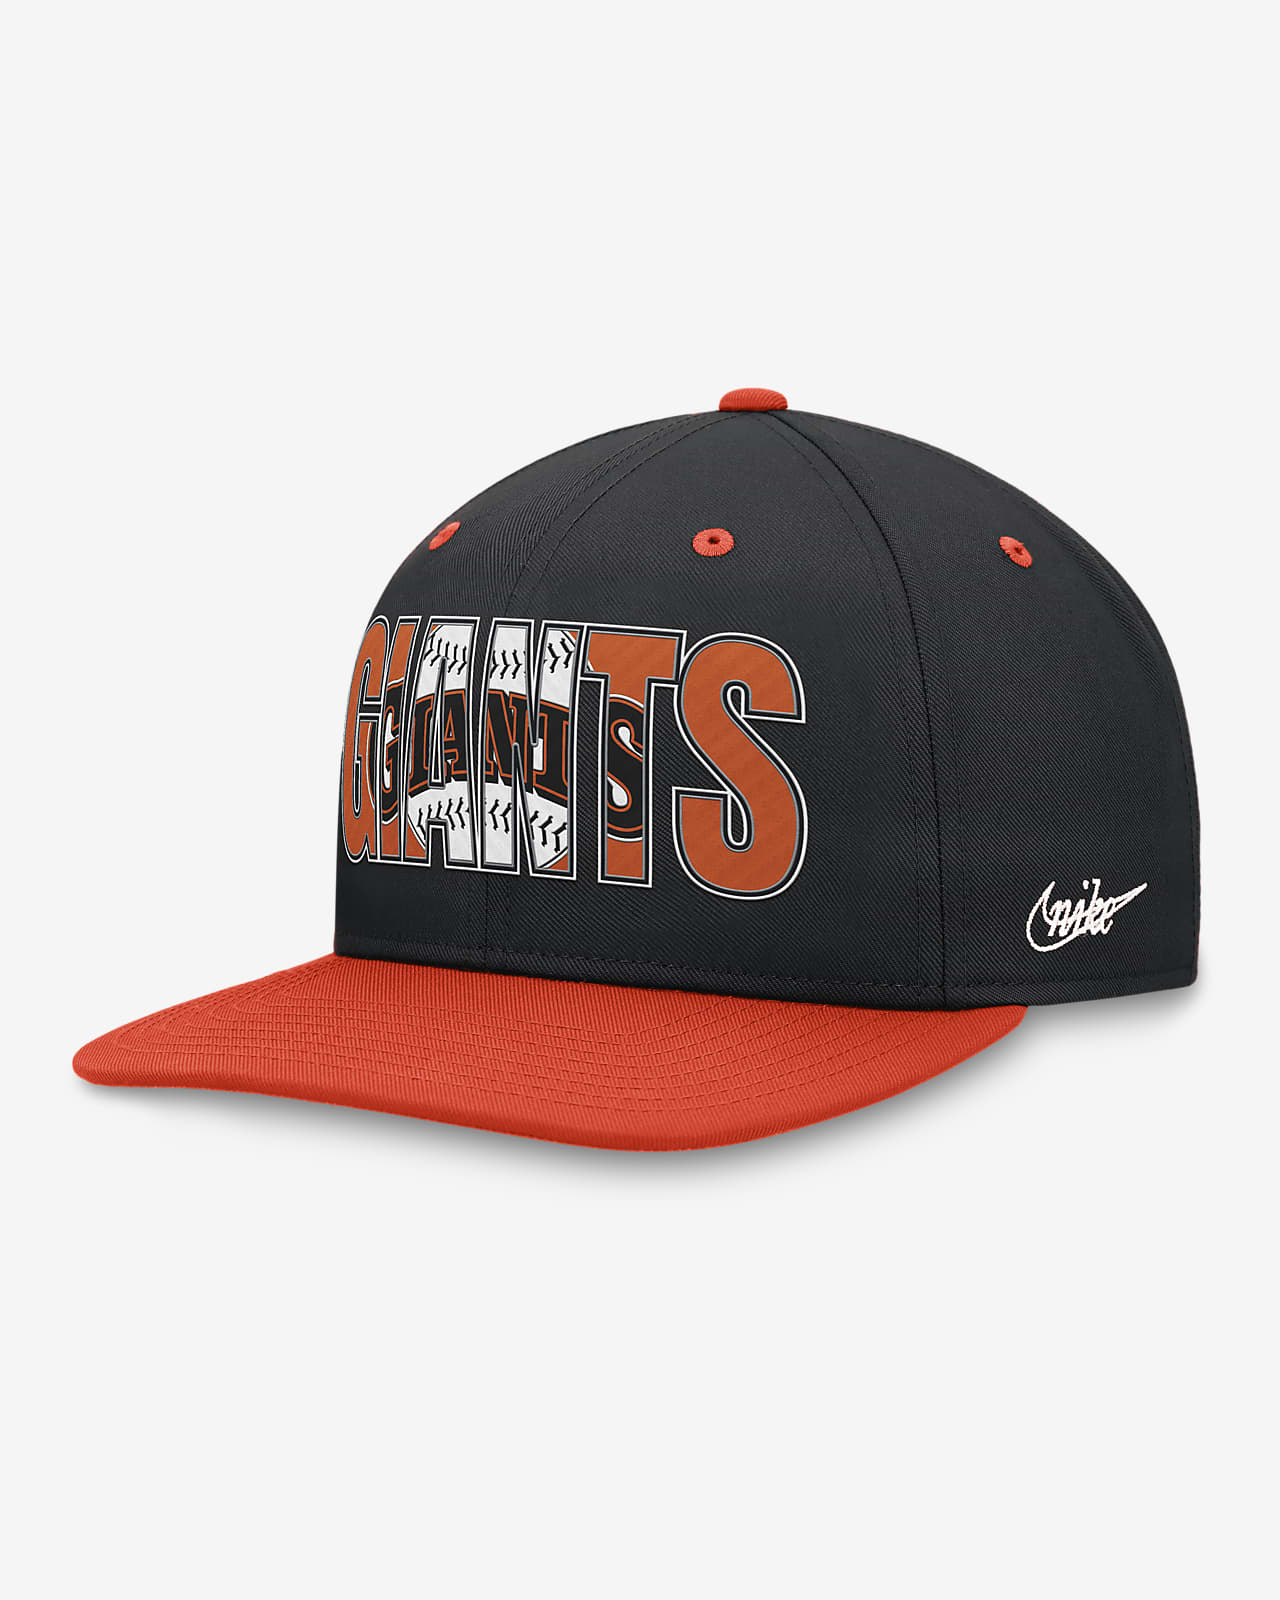 San Francisco Giants Pro Cooperstown Men's Nike MLB Adjustable Hat